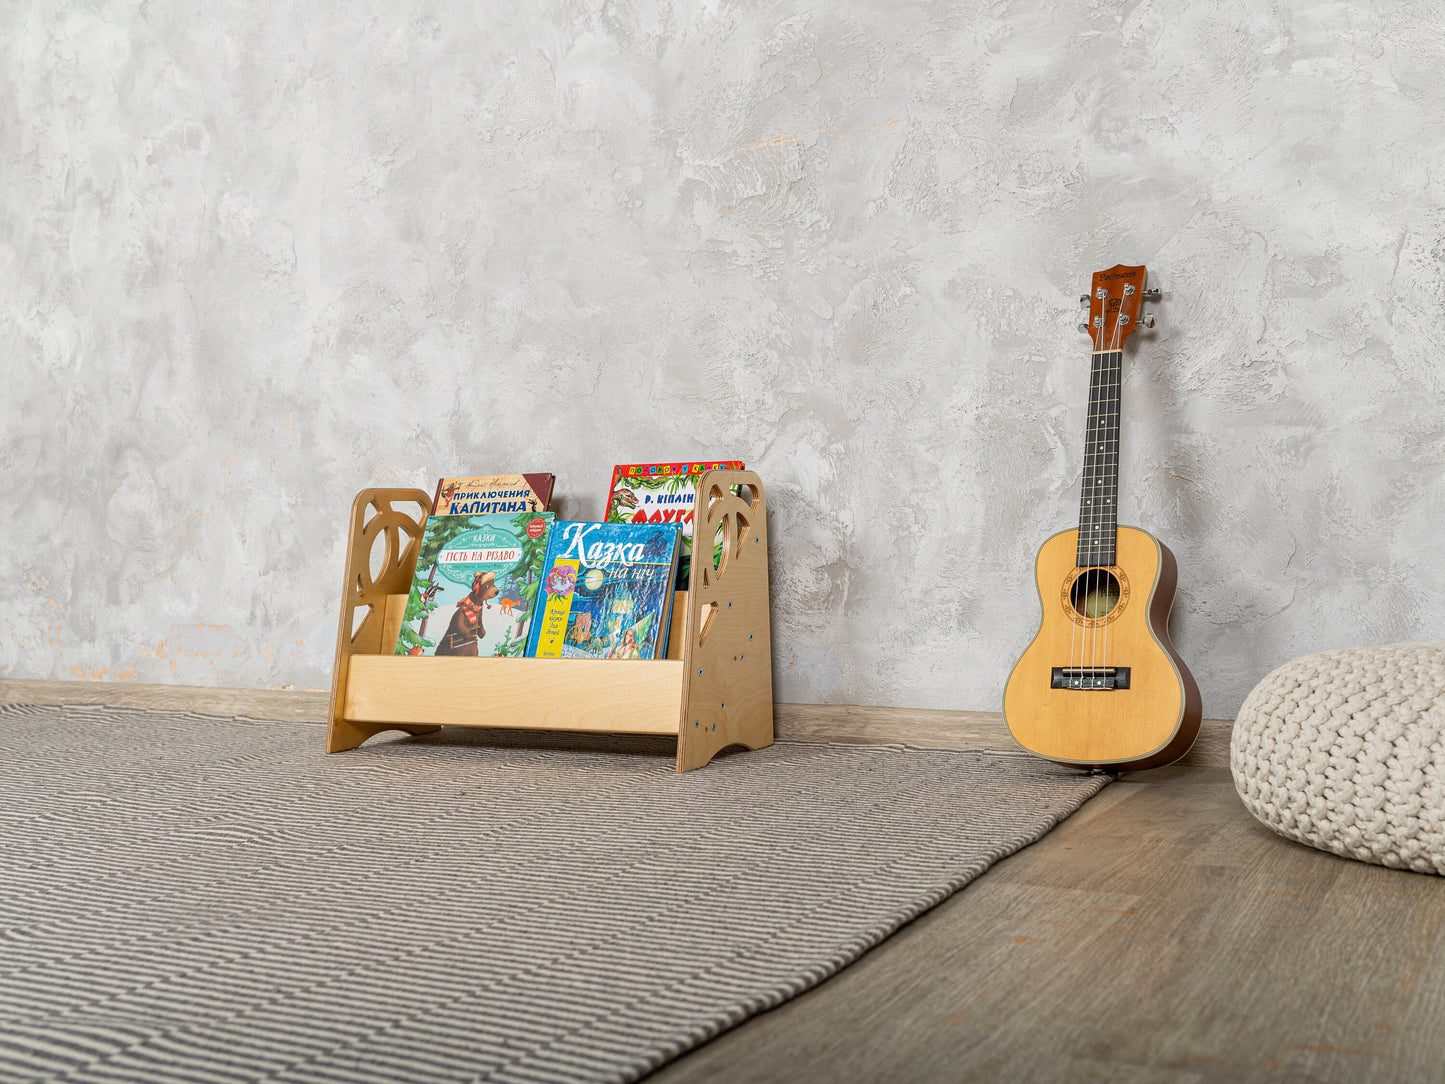 Montessori bookshelf, kids small bookshelf